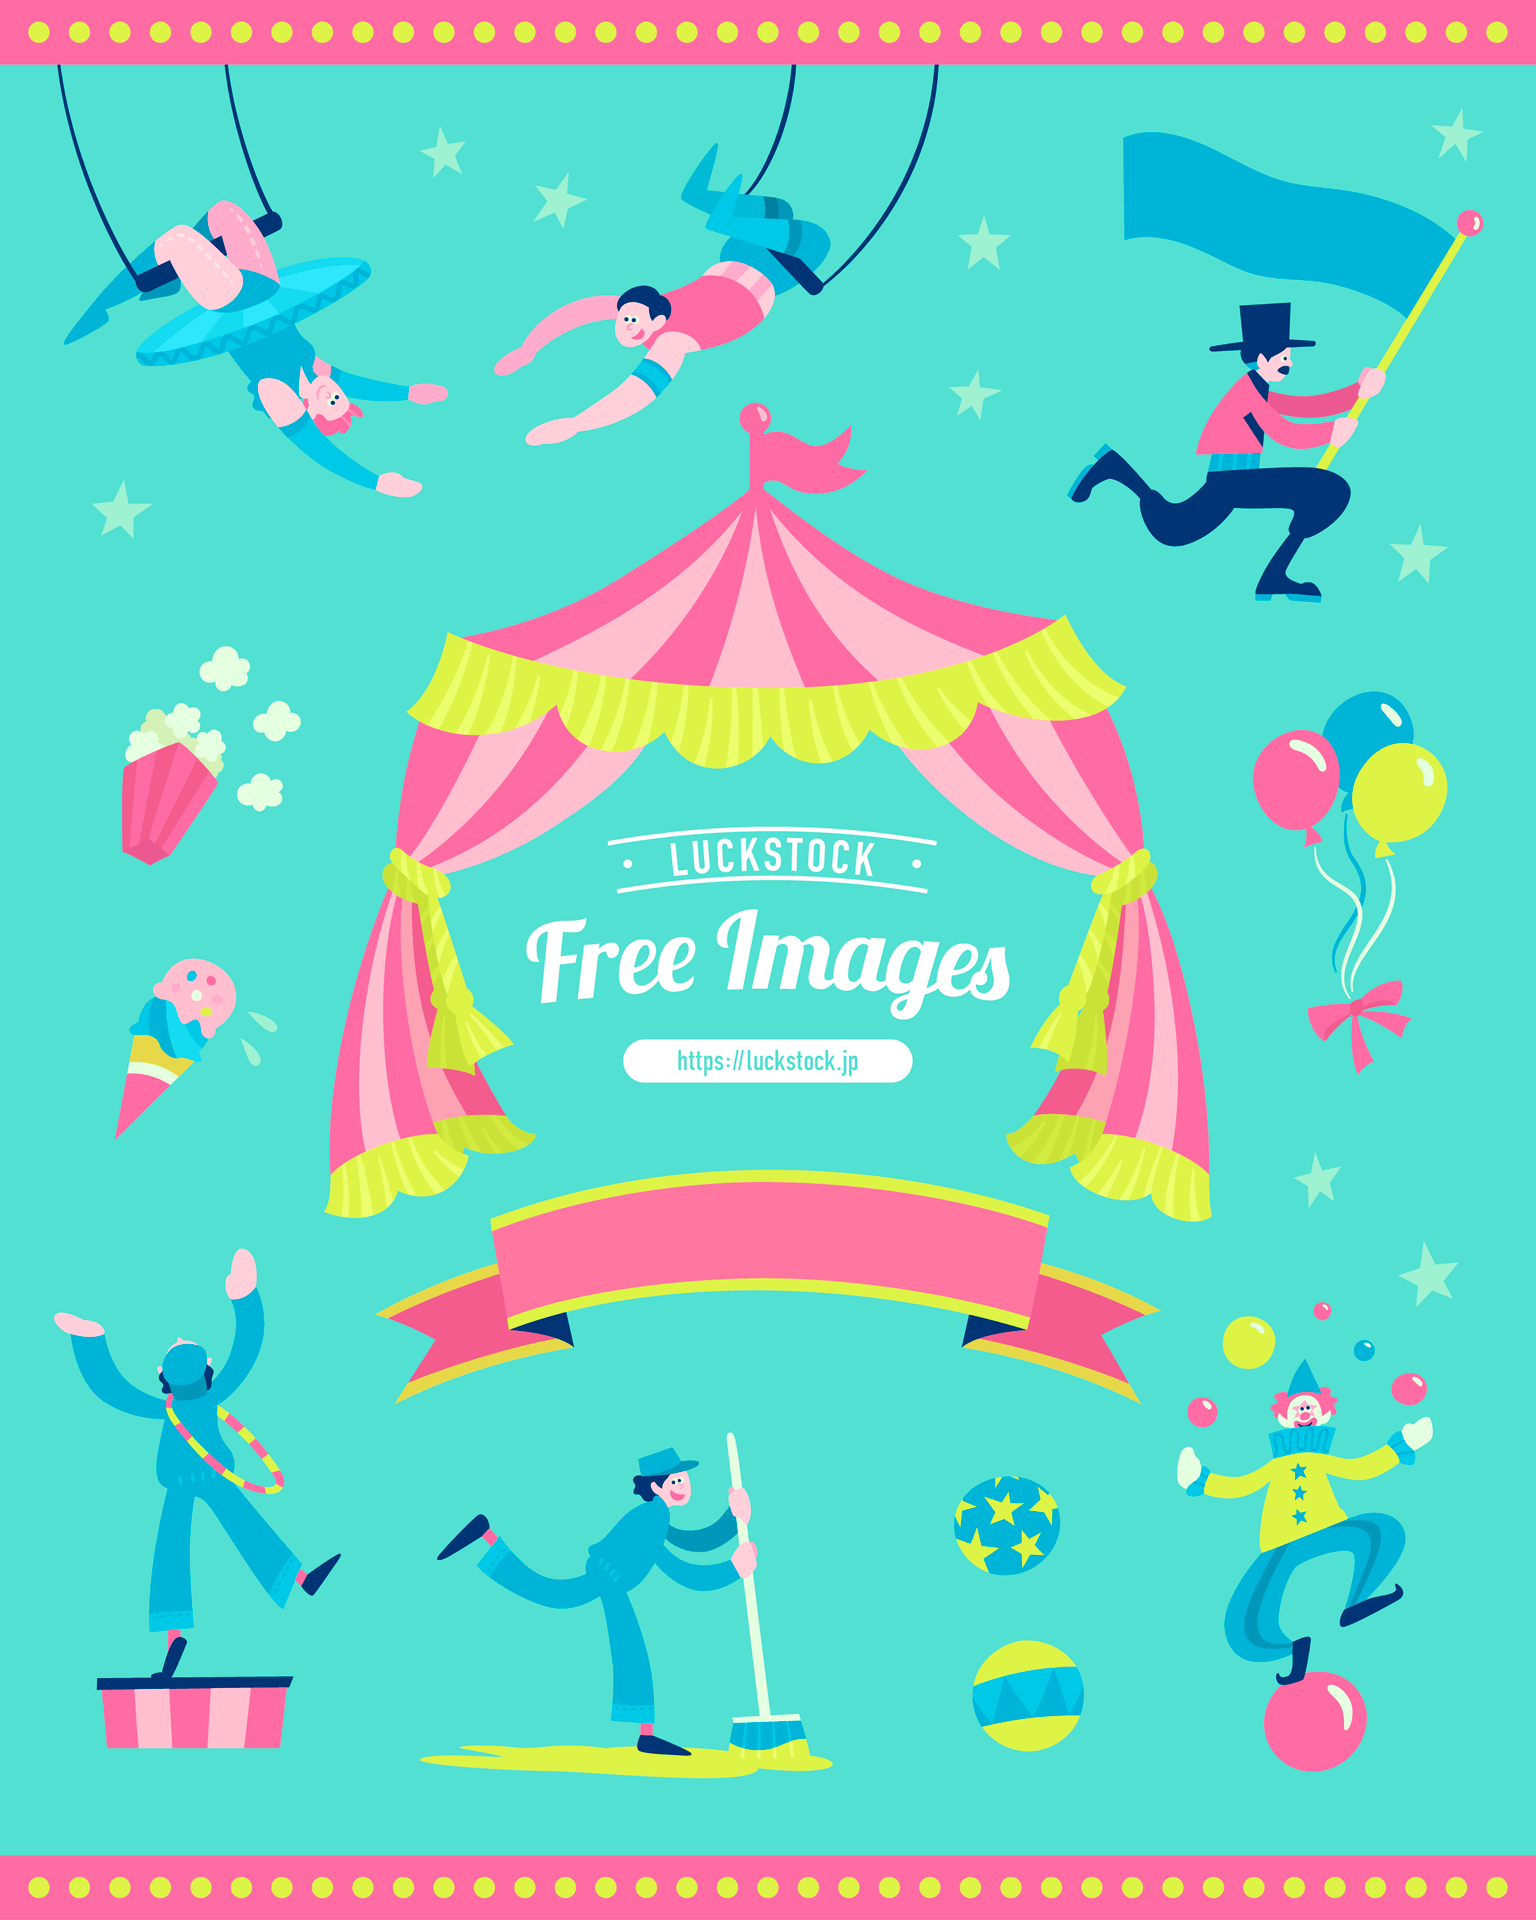 Luckstock Jp Free Images Circus